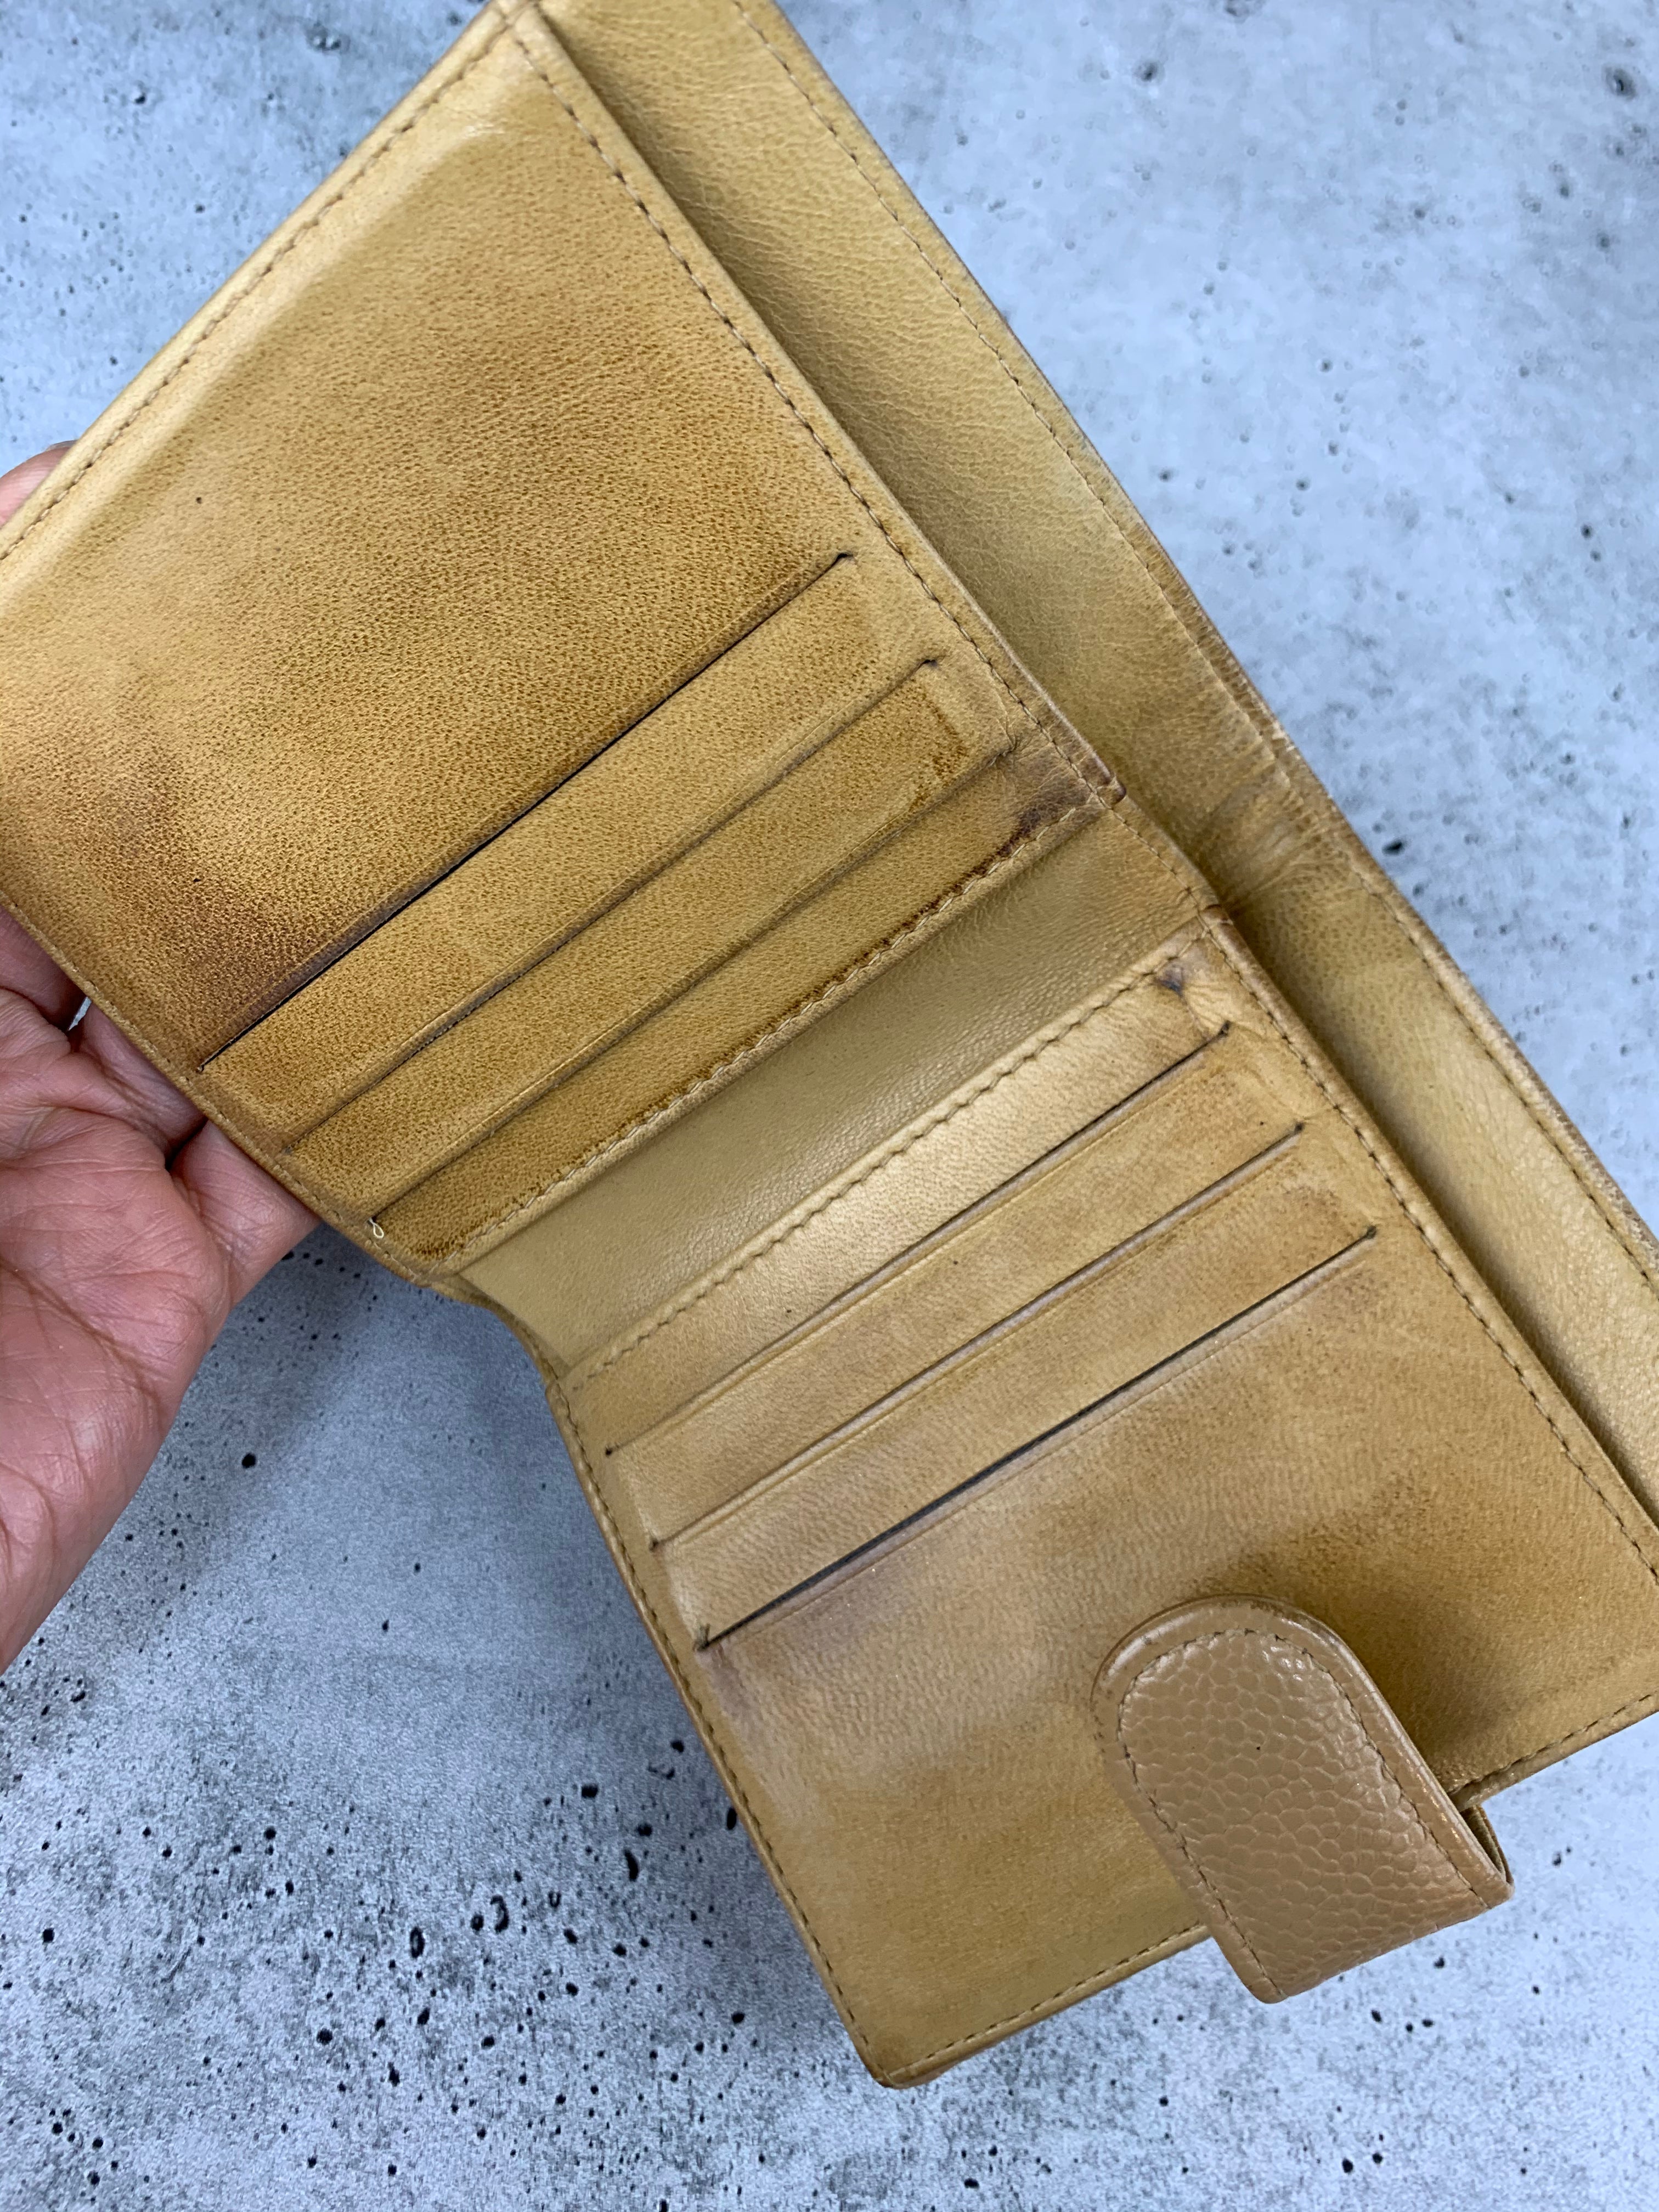 Chanel Wallet - Chanel Dark Brown Vintage Wallet